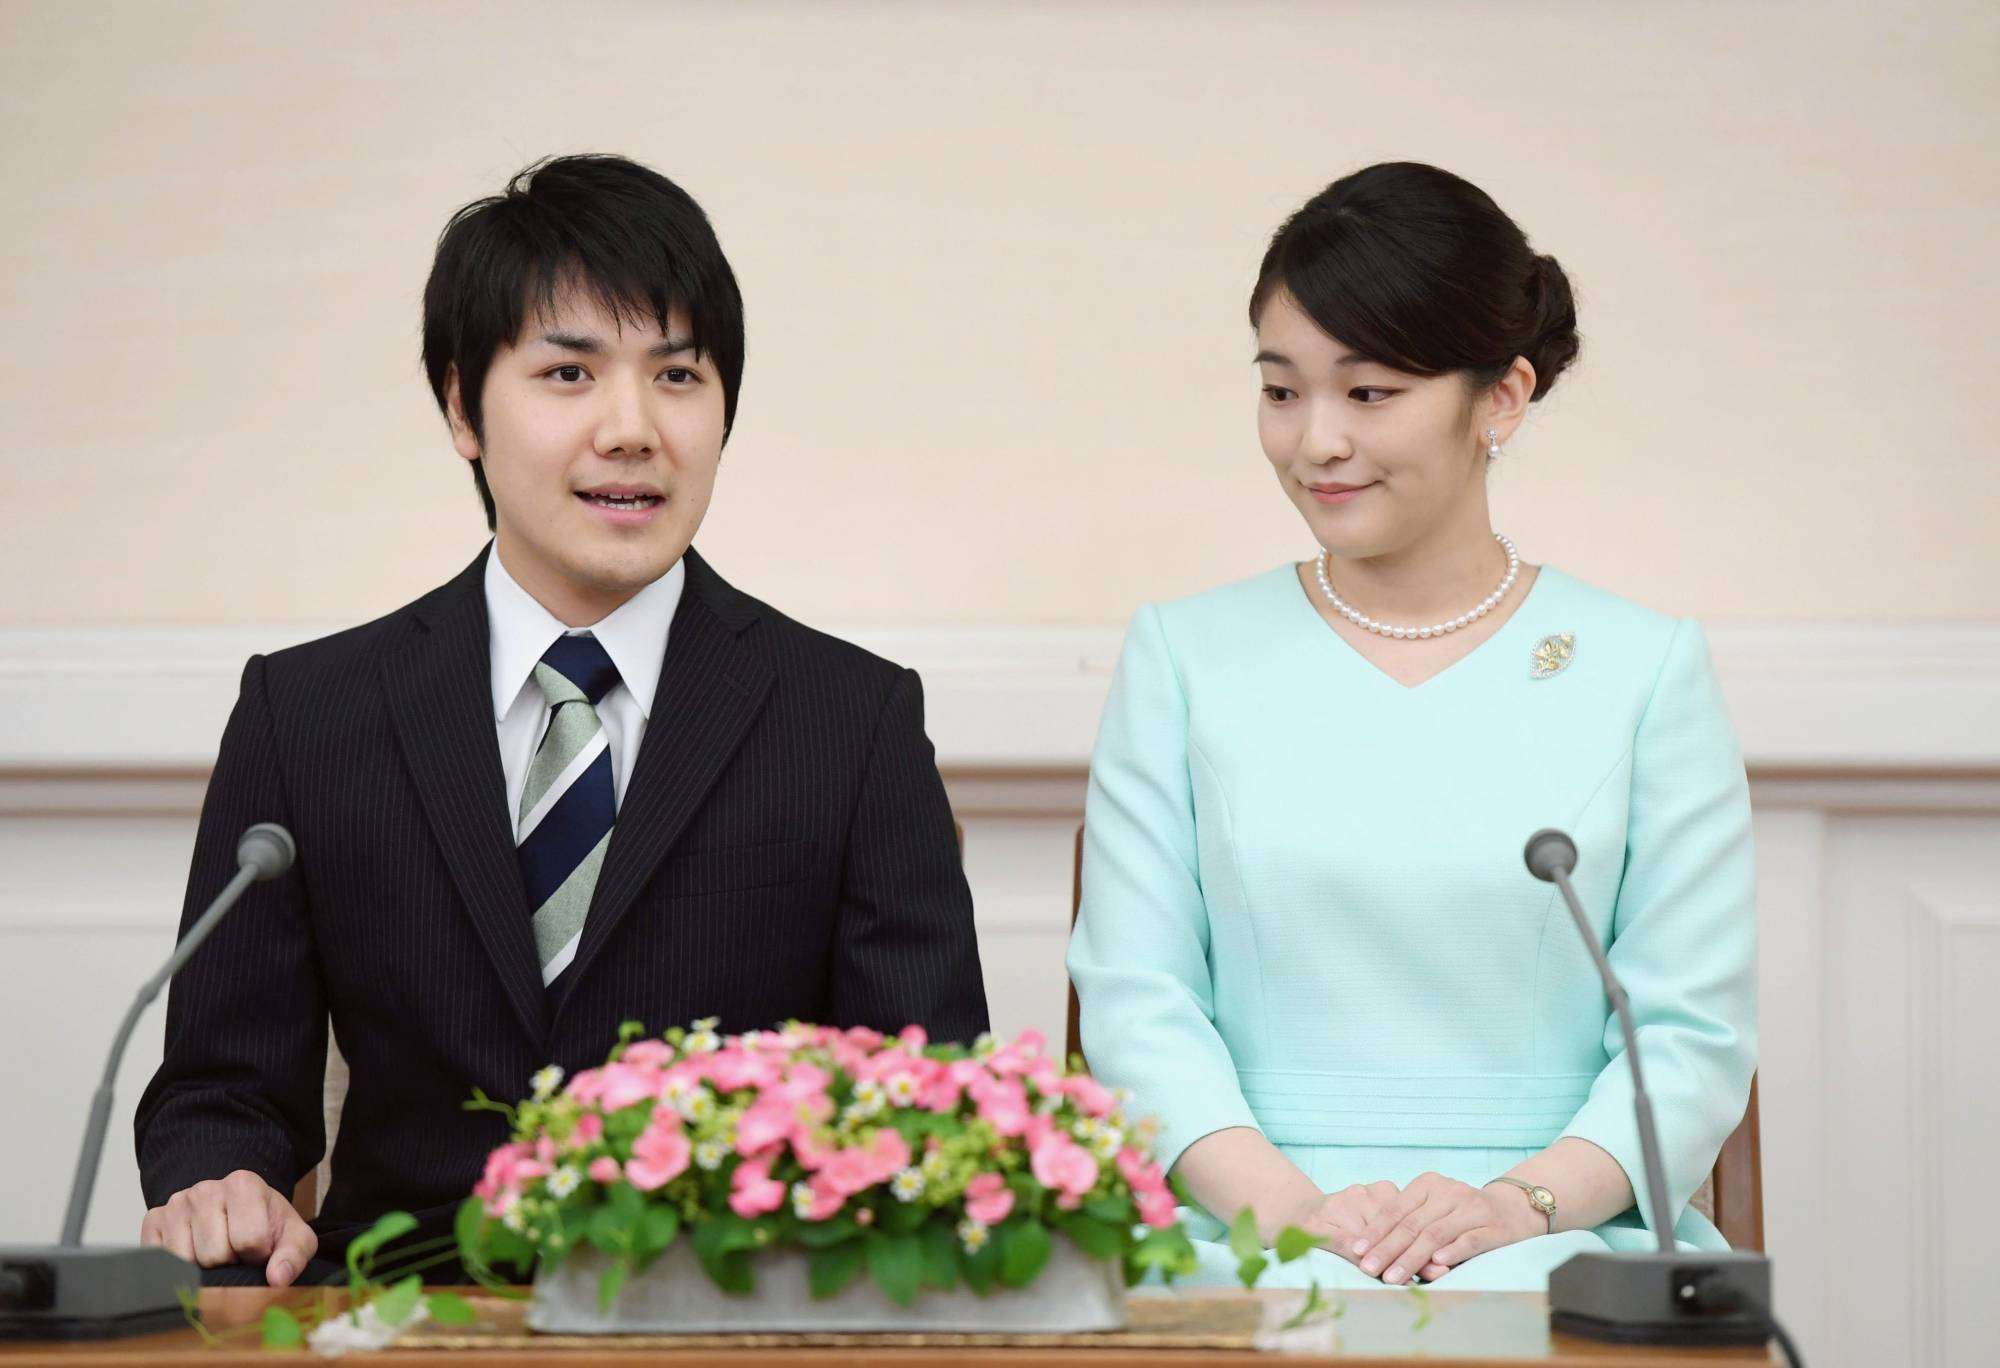 Japan S Princess Mako Marries Non Royal Sweetheart Kei Komuro